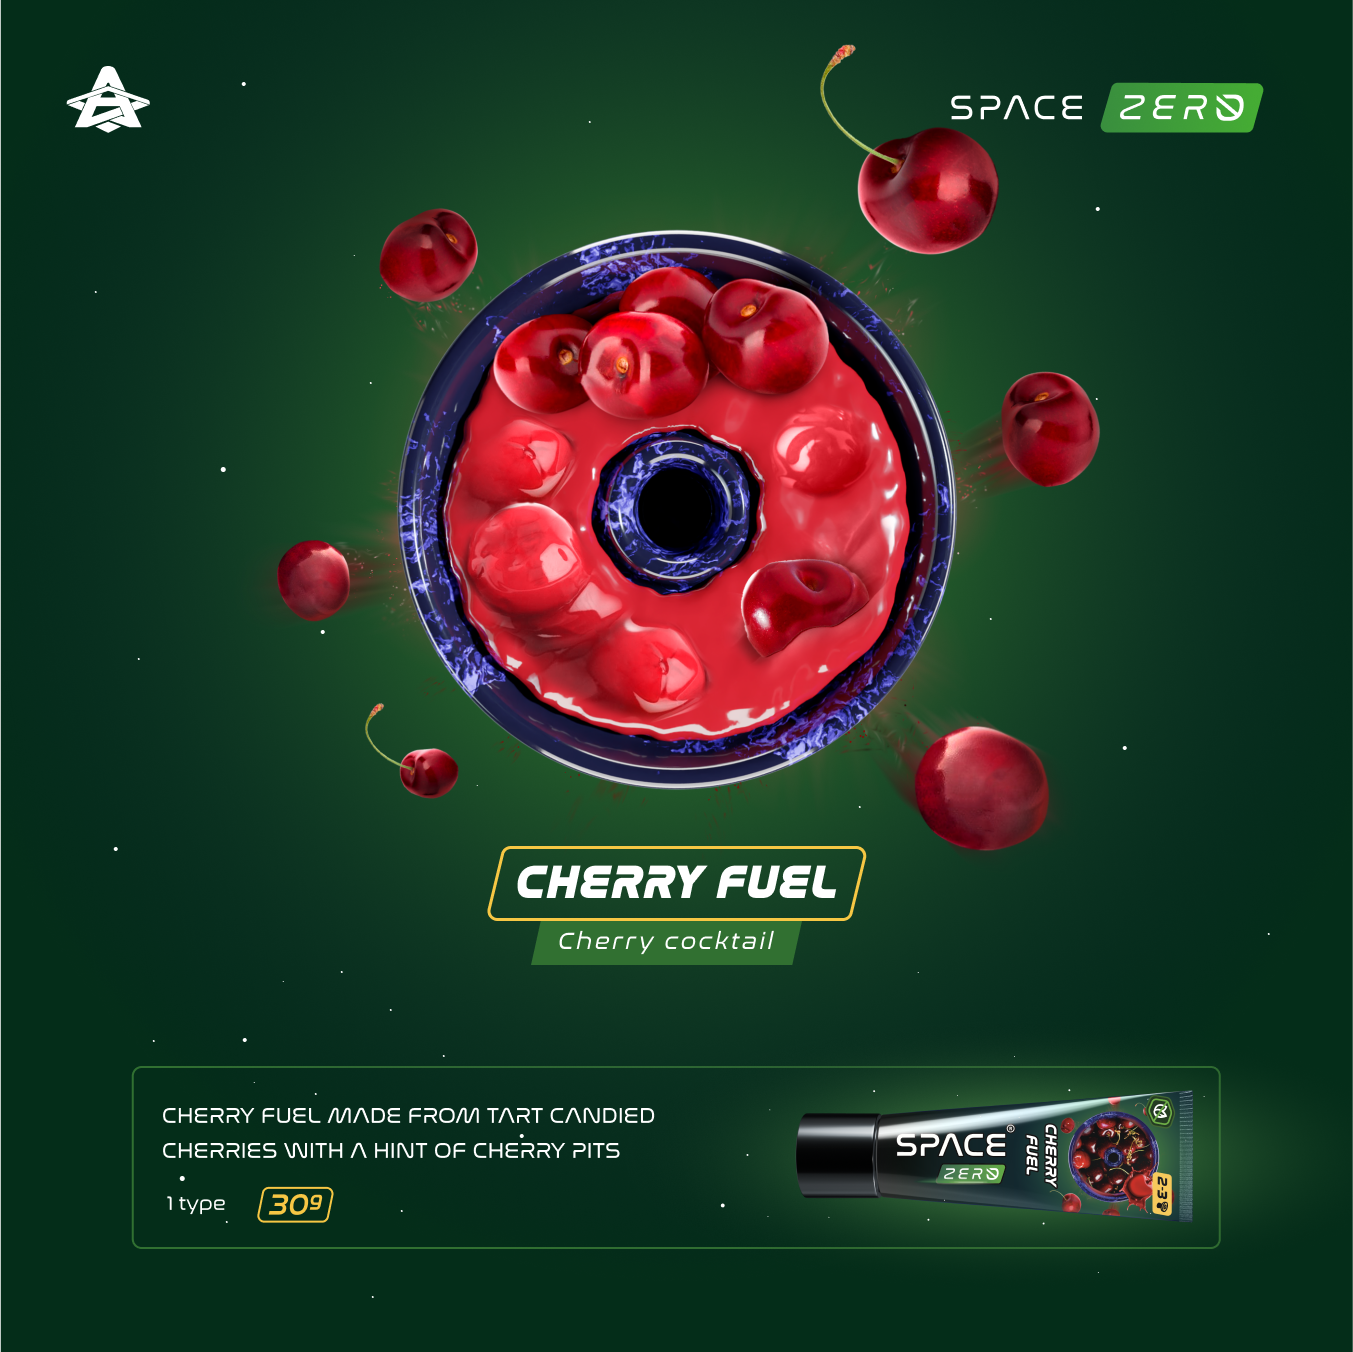 Space Smoke ZERO Cherry Fuel (Cherry Cocktail) Nicotine Free Hookah Paste 30g